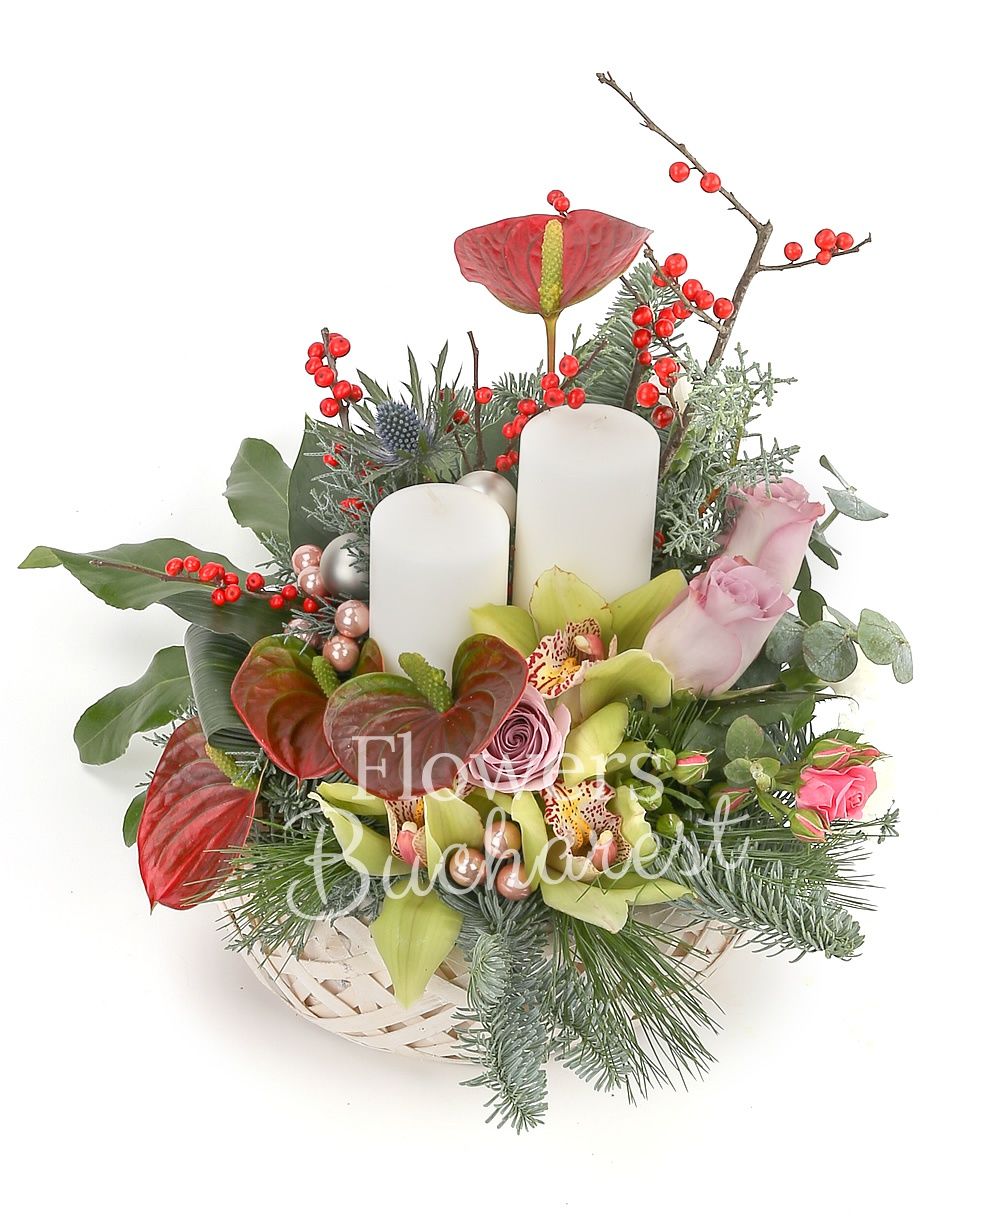 4 anthurium, 3 mauve roses, 1 pink minirose, 1 green cymbidium, 1 eryngium, 1 white lisianthus, ilex, candles, globes, greenery